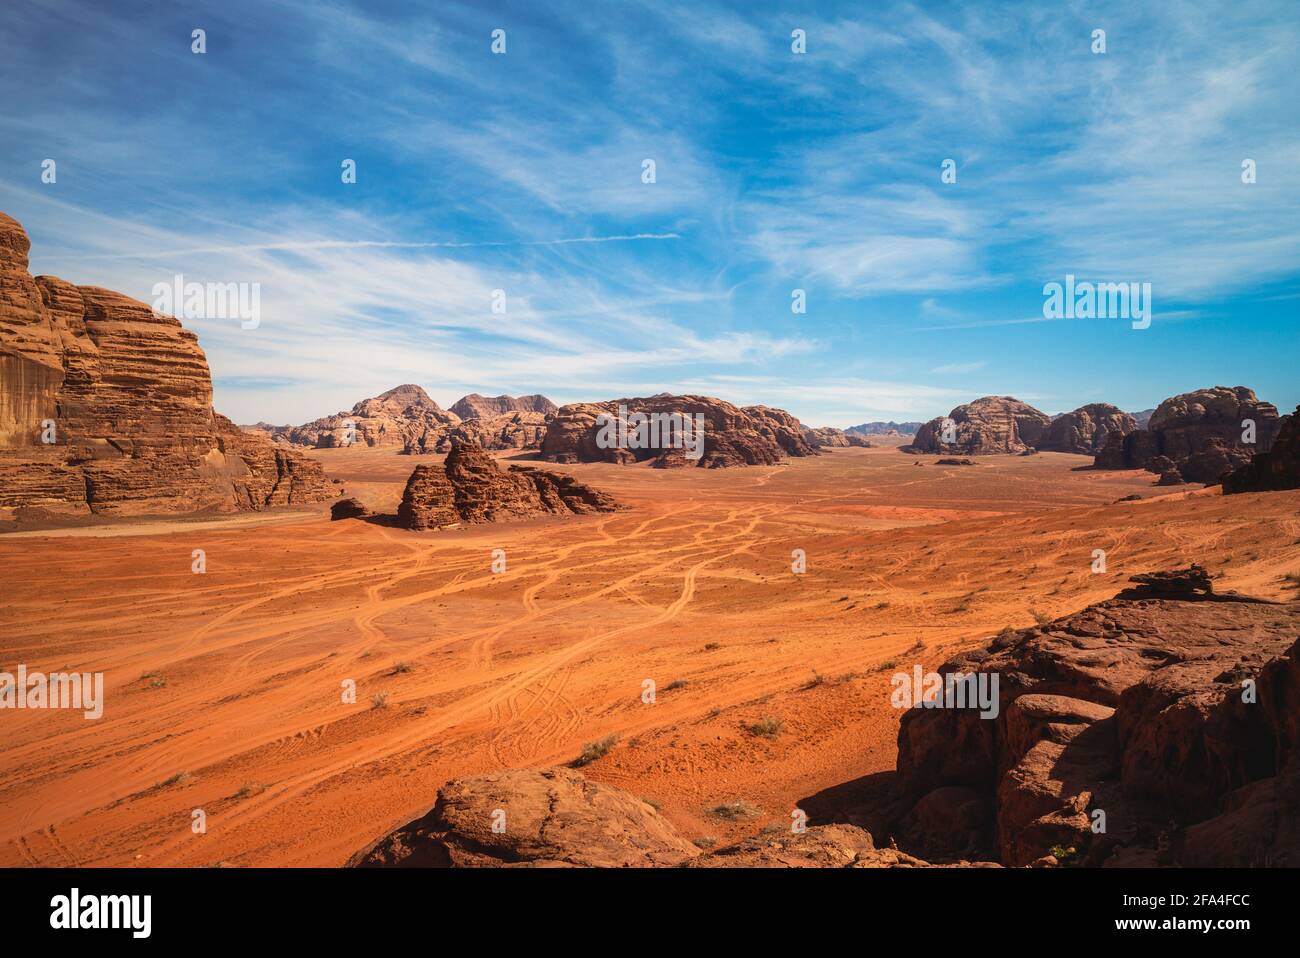 Wadi Rum desert, or Valley of the Moon, in Jordan Stock Photo